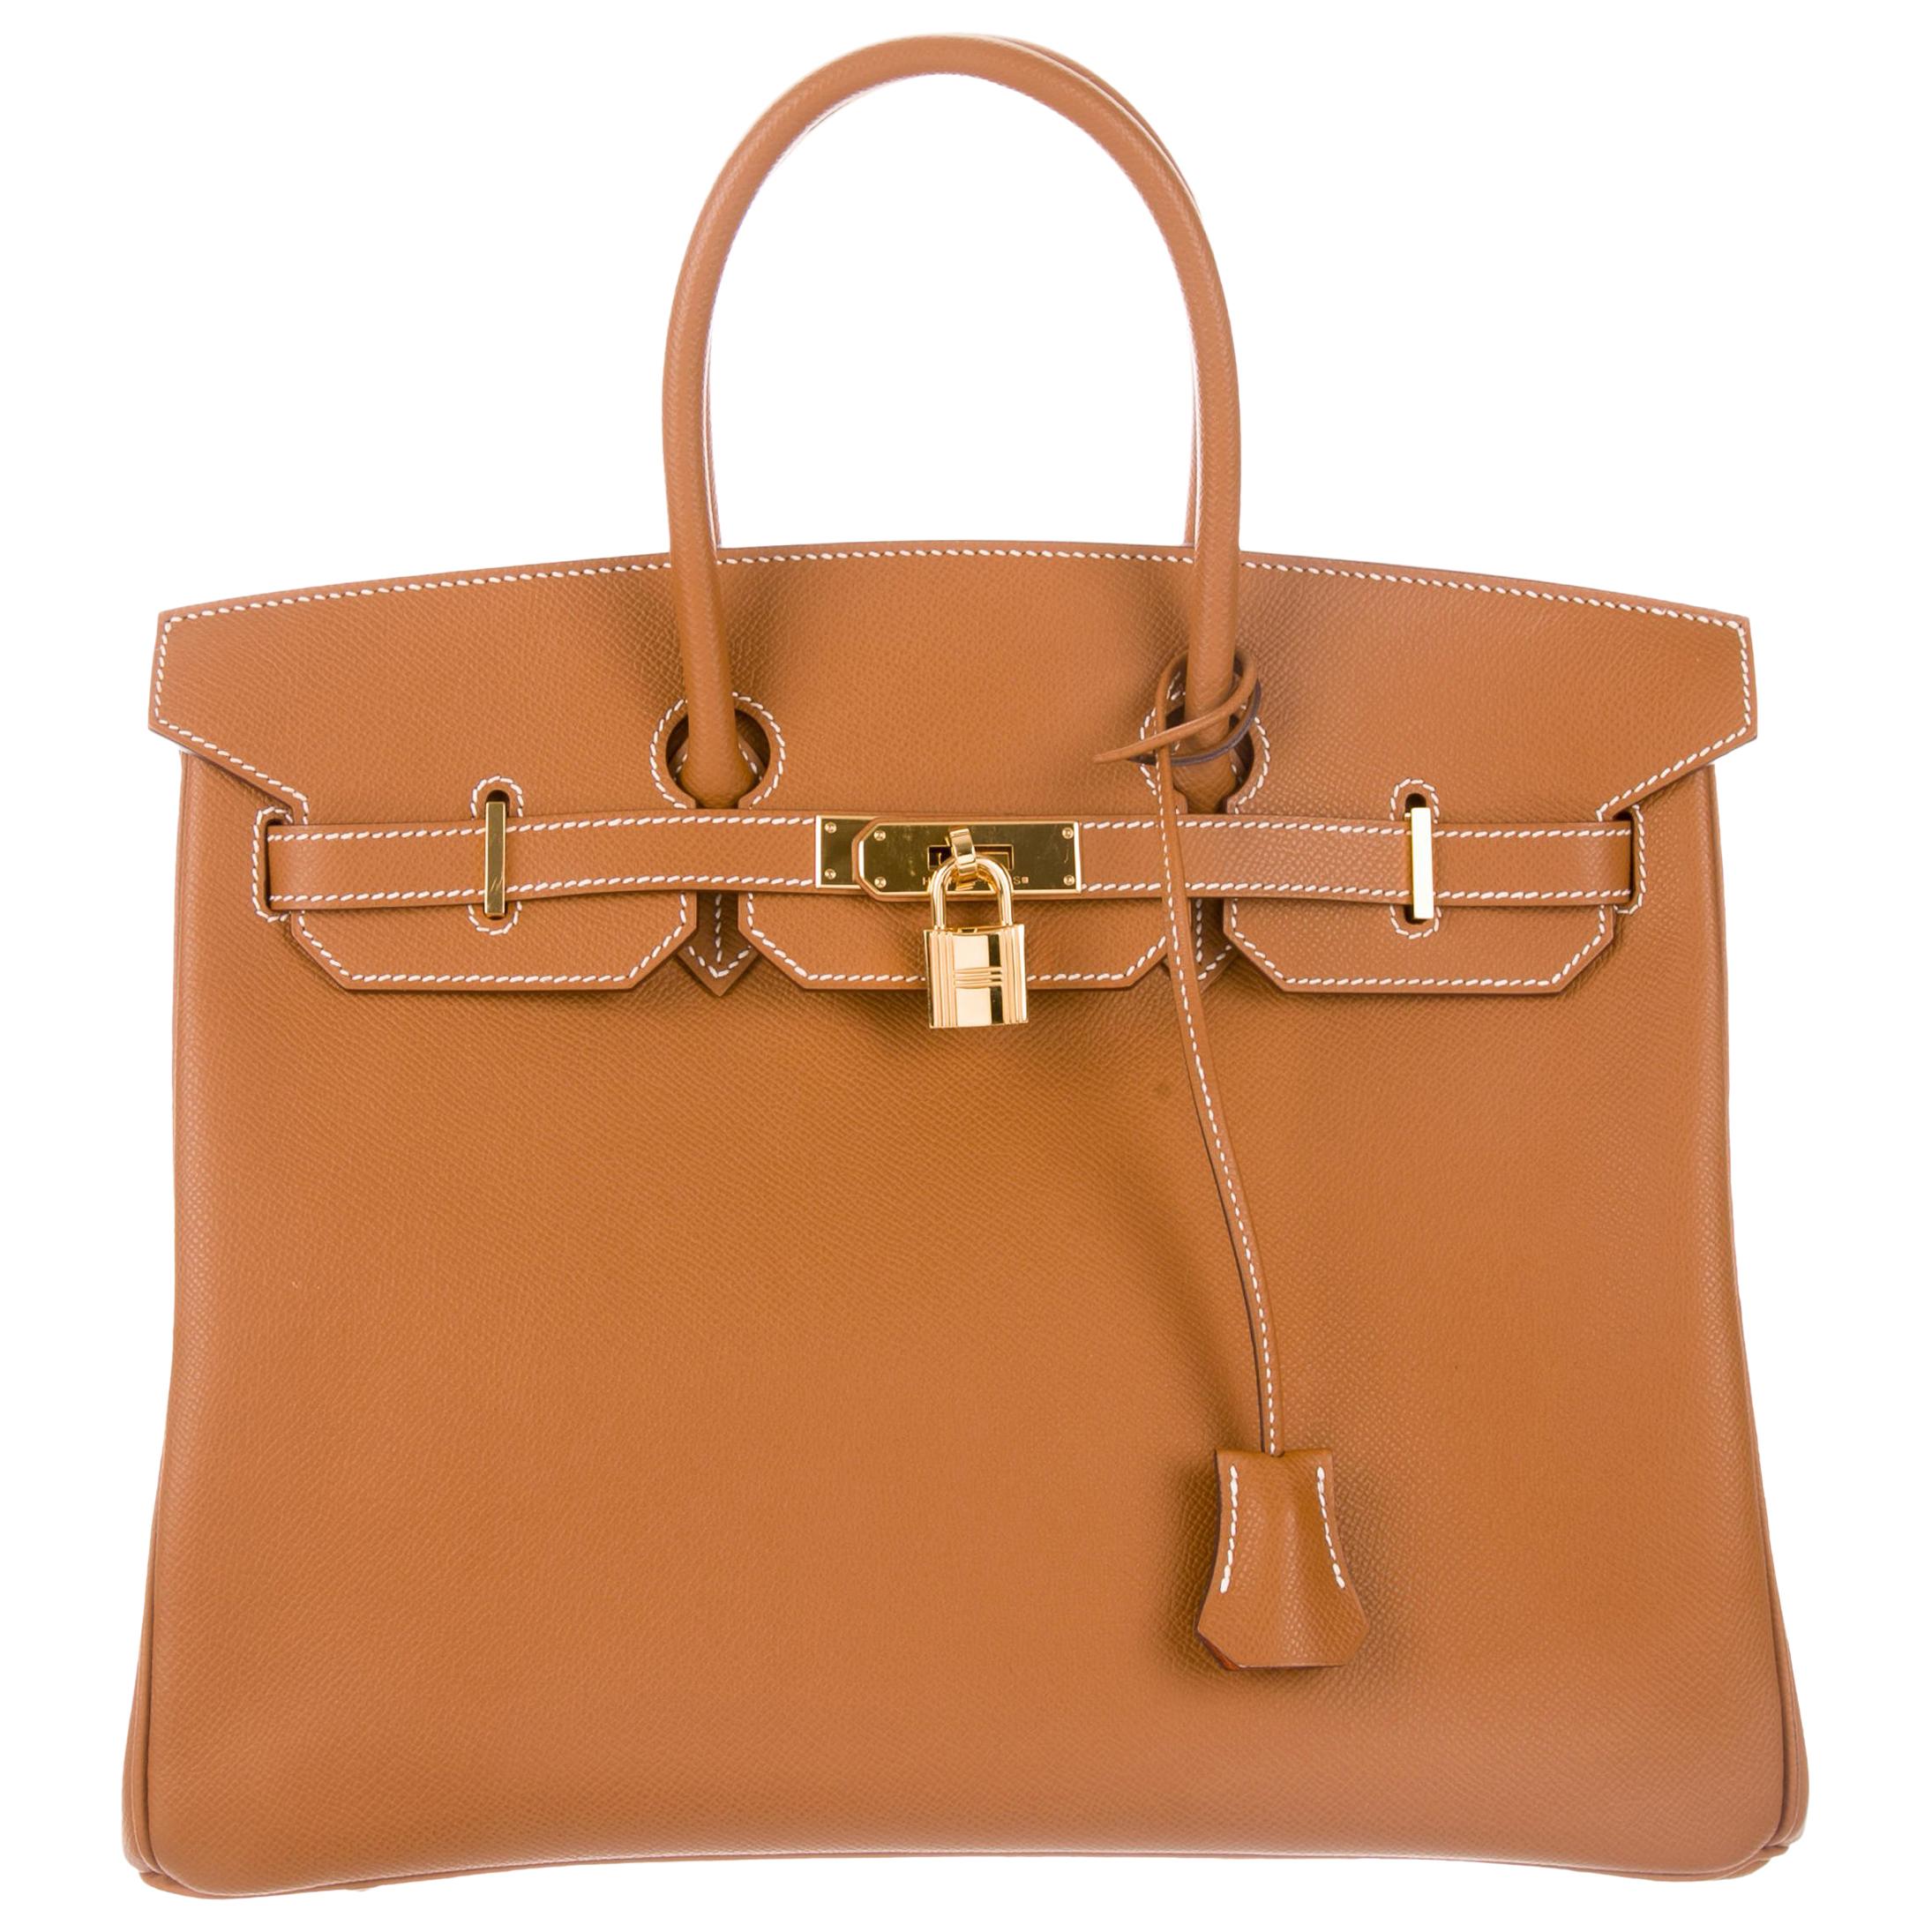 Hermes Birkin 35 Cognac Leather Top Handle Satchel Carryall Bag W/Accessories